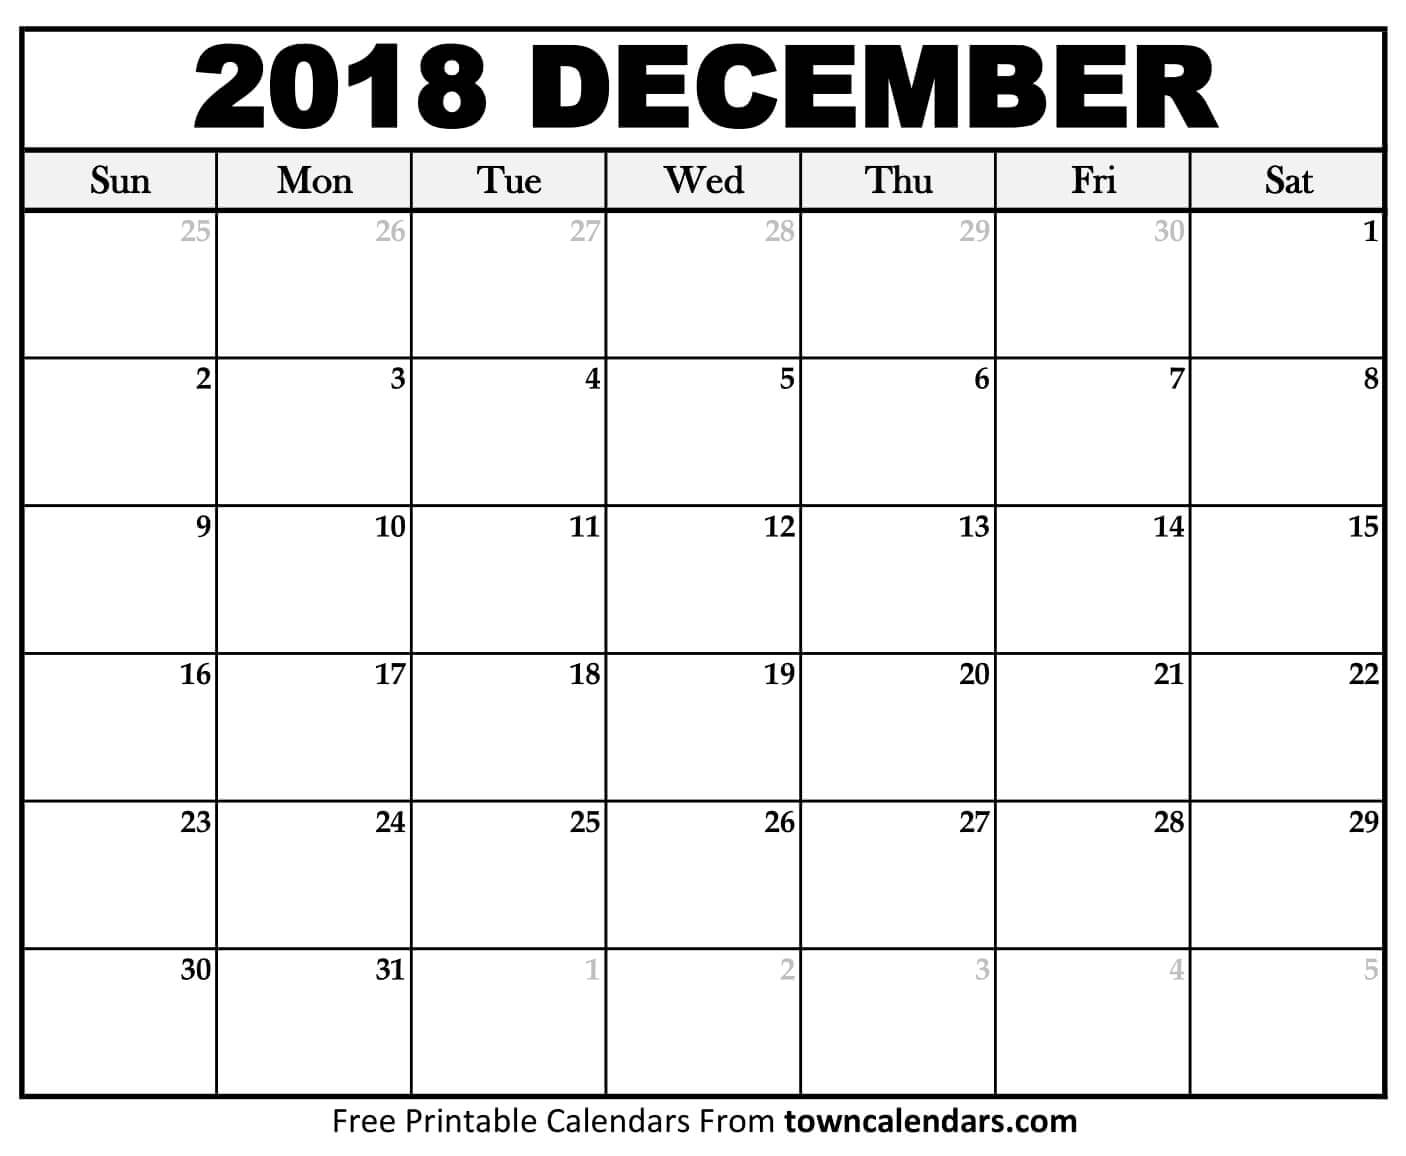 december-2018-calendar-free-download-freemium-templates